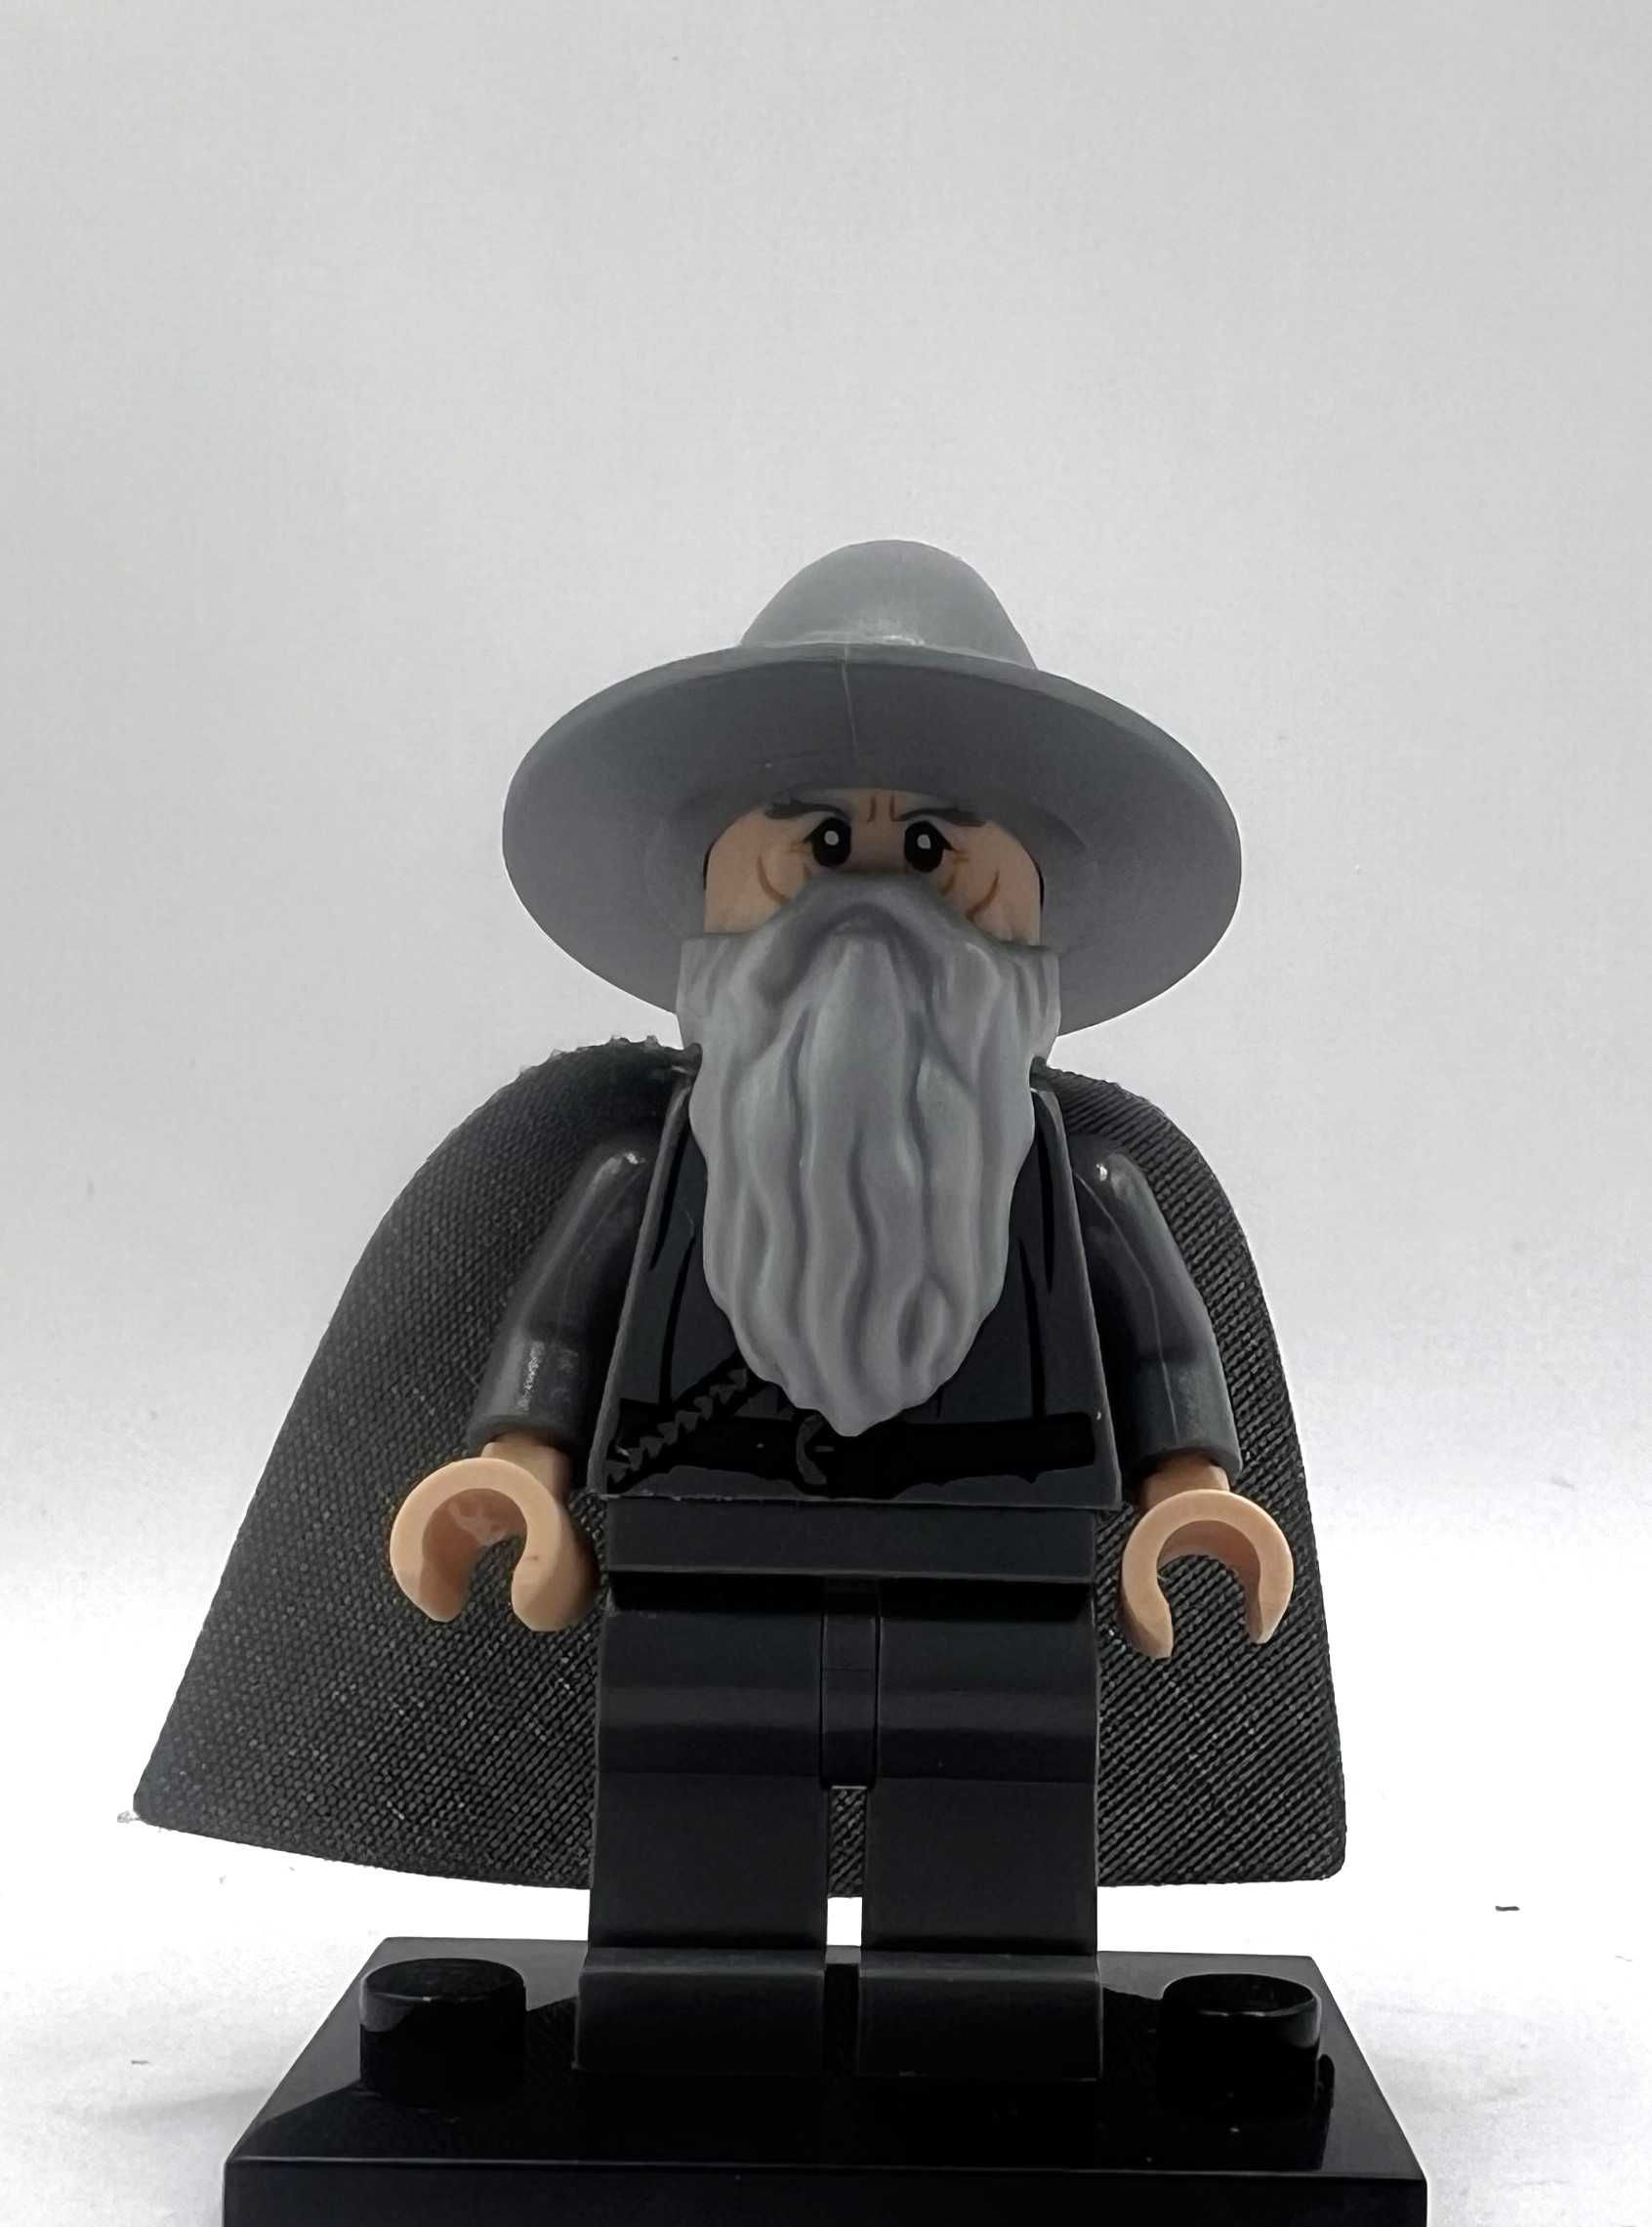 LEGO THE HOBBIT - Gandalf the Grey - Wizard (lor001)